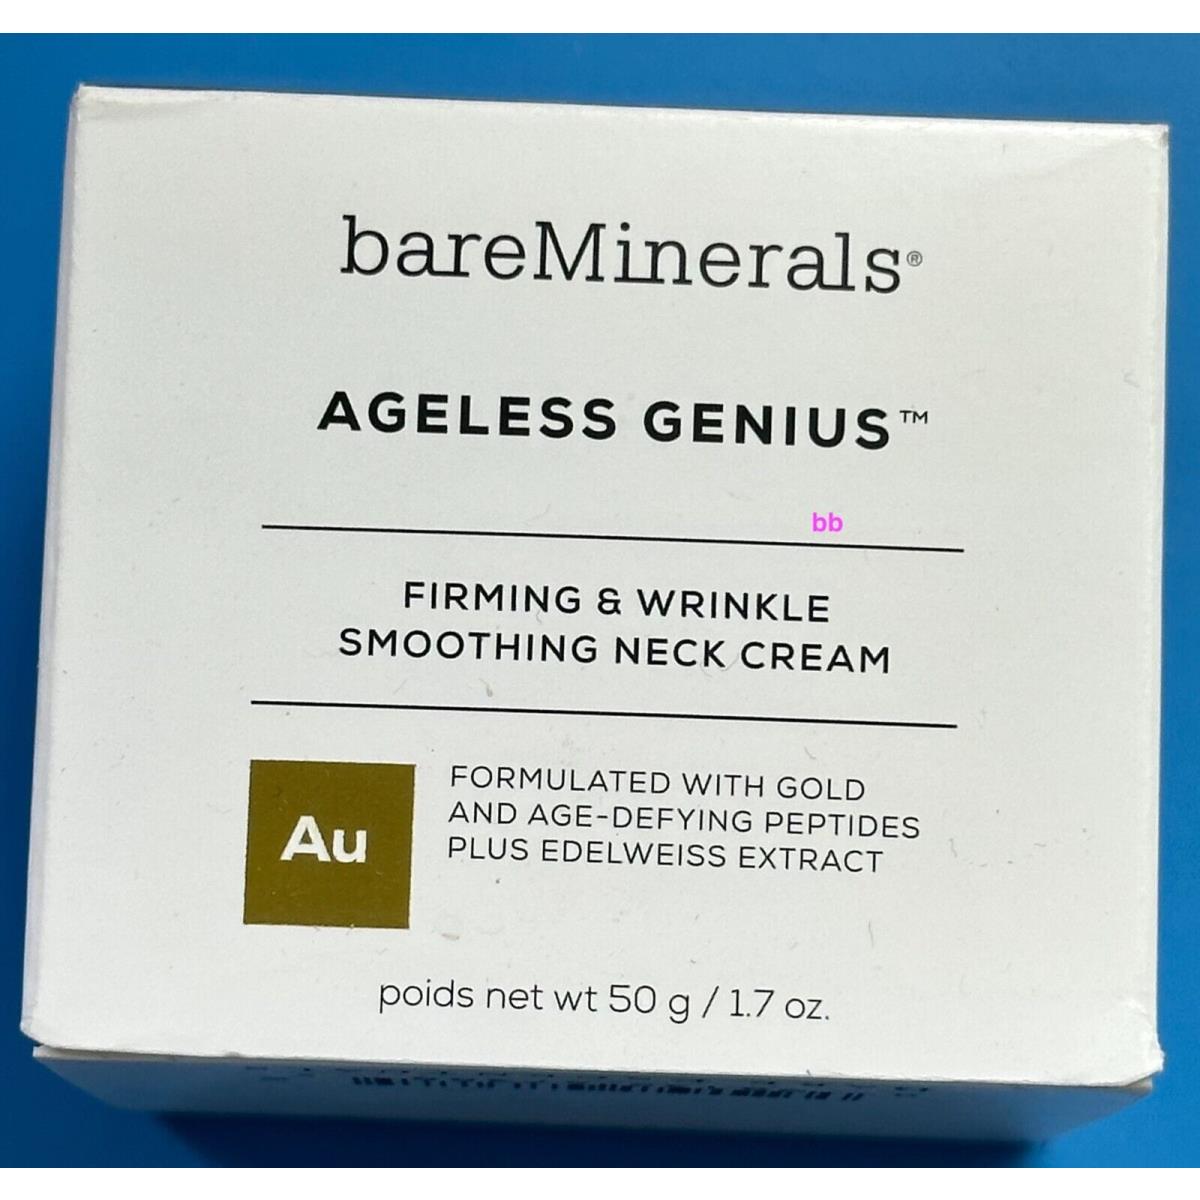 Bareminerals Ageless Genius Firming Wrinkle Smoothing Neck Cream 1.7 oz